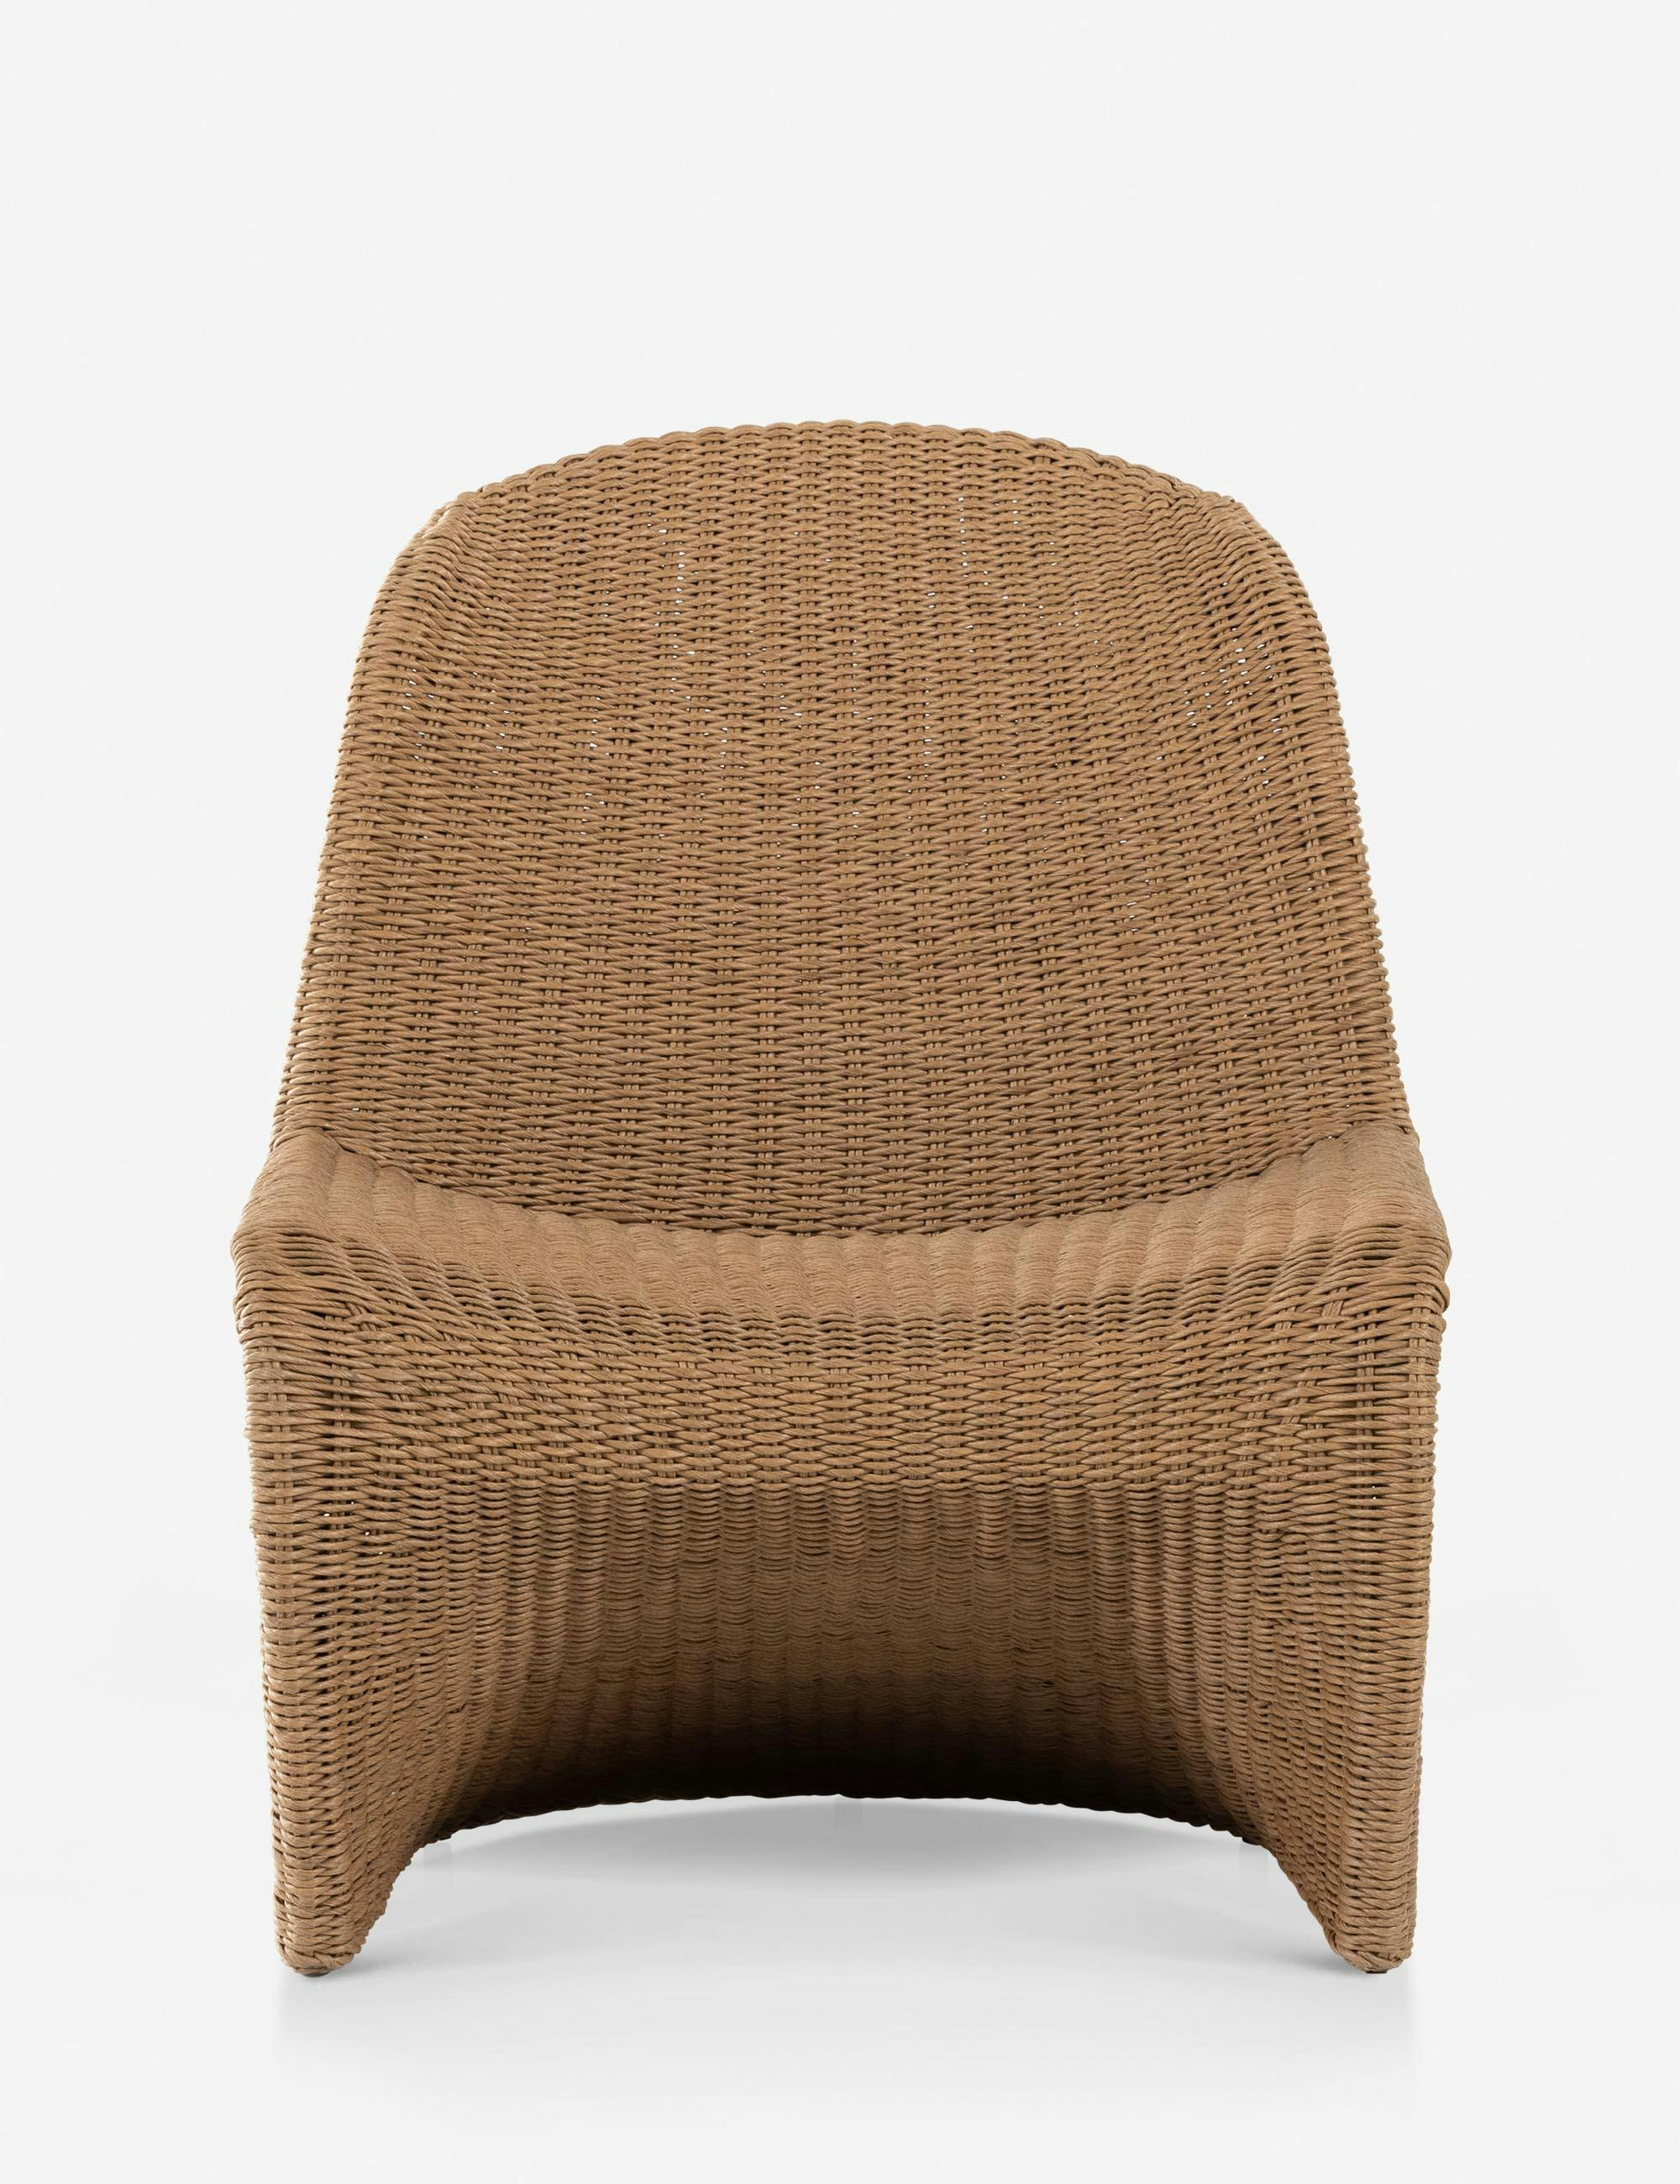 Sleek Vintage Natural Wicker 28" Outdoor Accent Chair